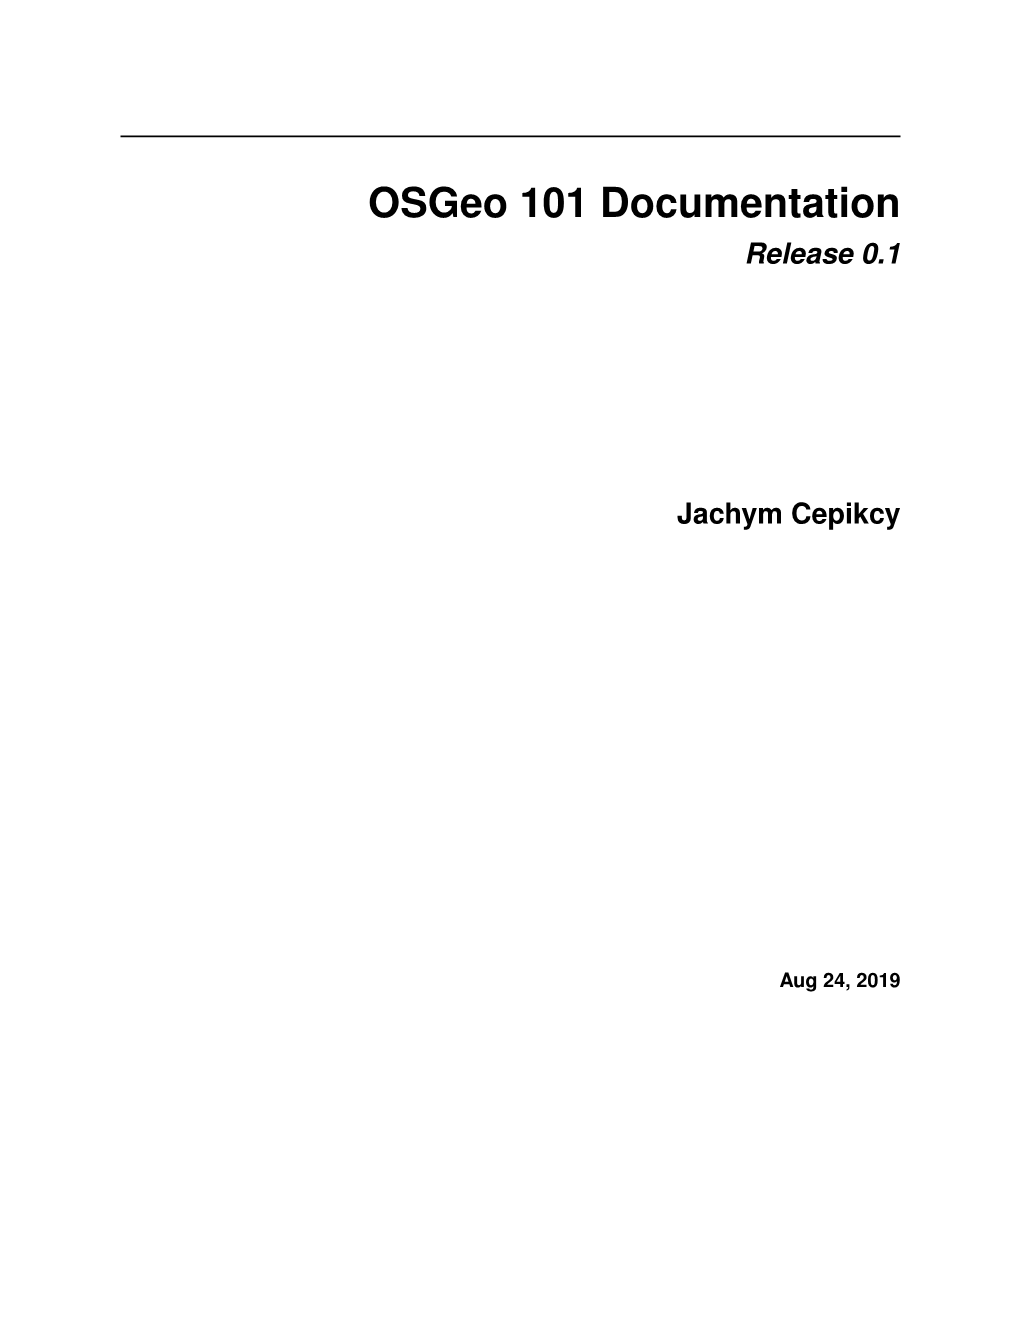 Osgeo 101 Documentation Release 0.1